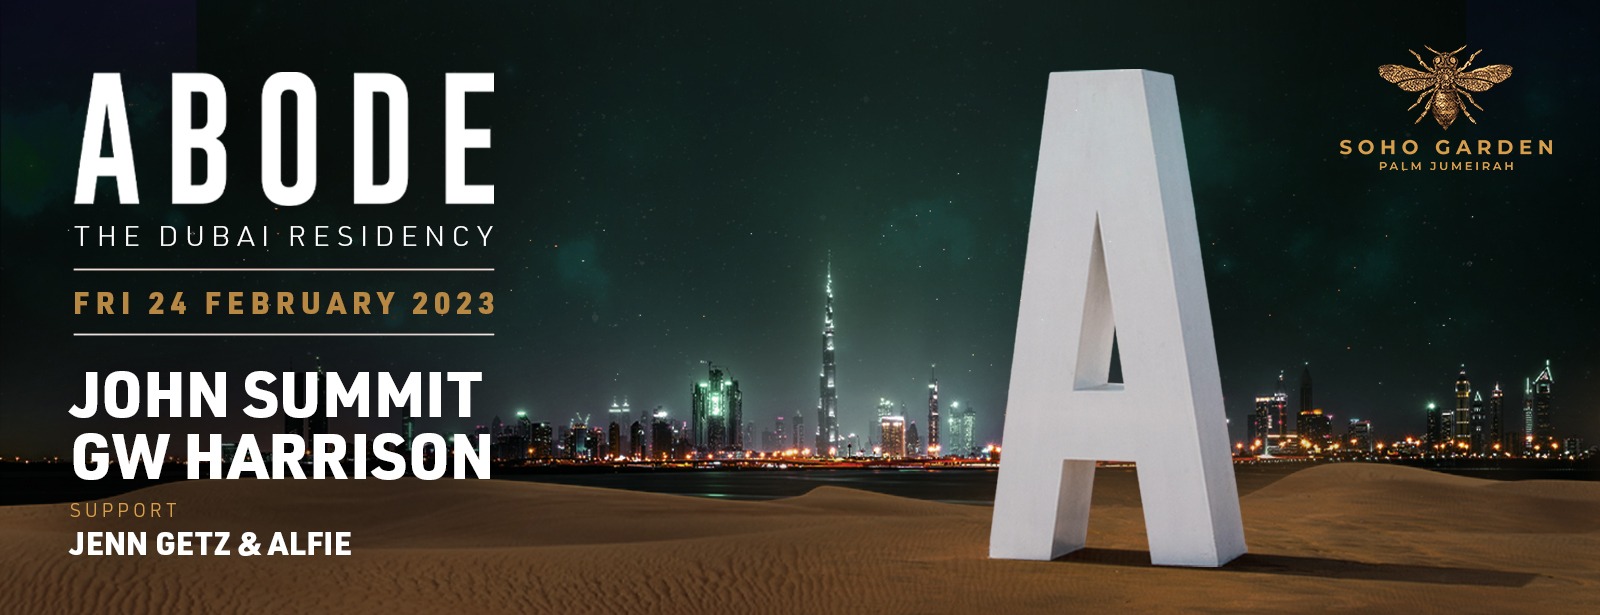 ABODE (John Summit) Live in Soho Garden Palm Jumeirah - Coming Soon in UAE